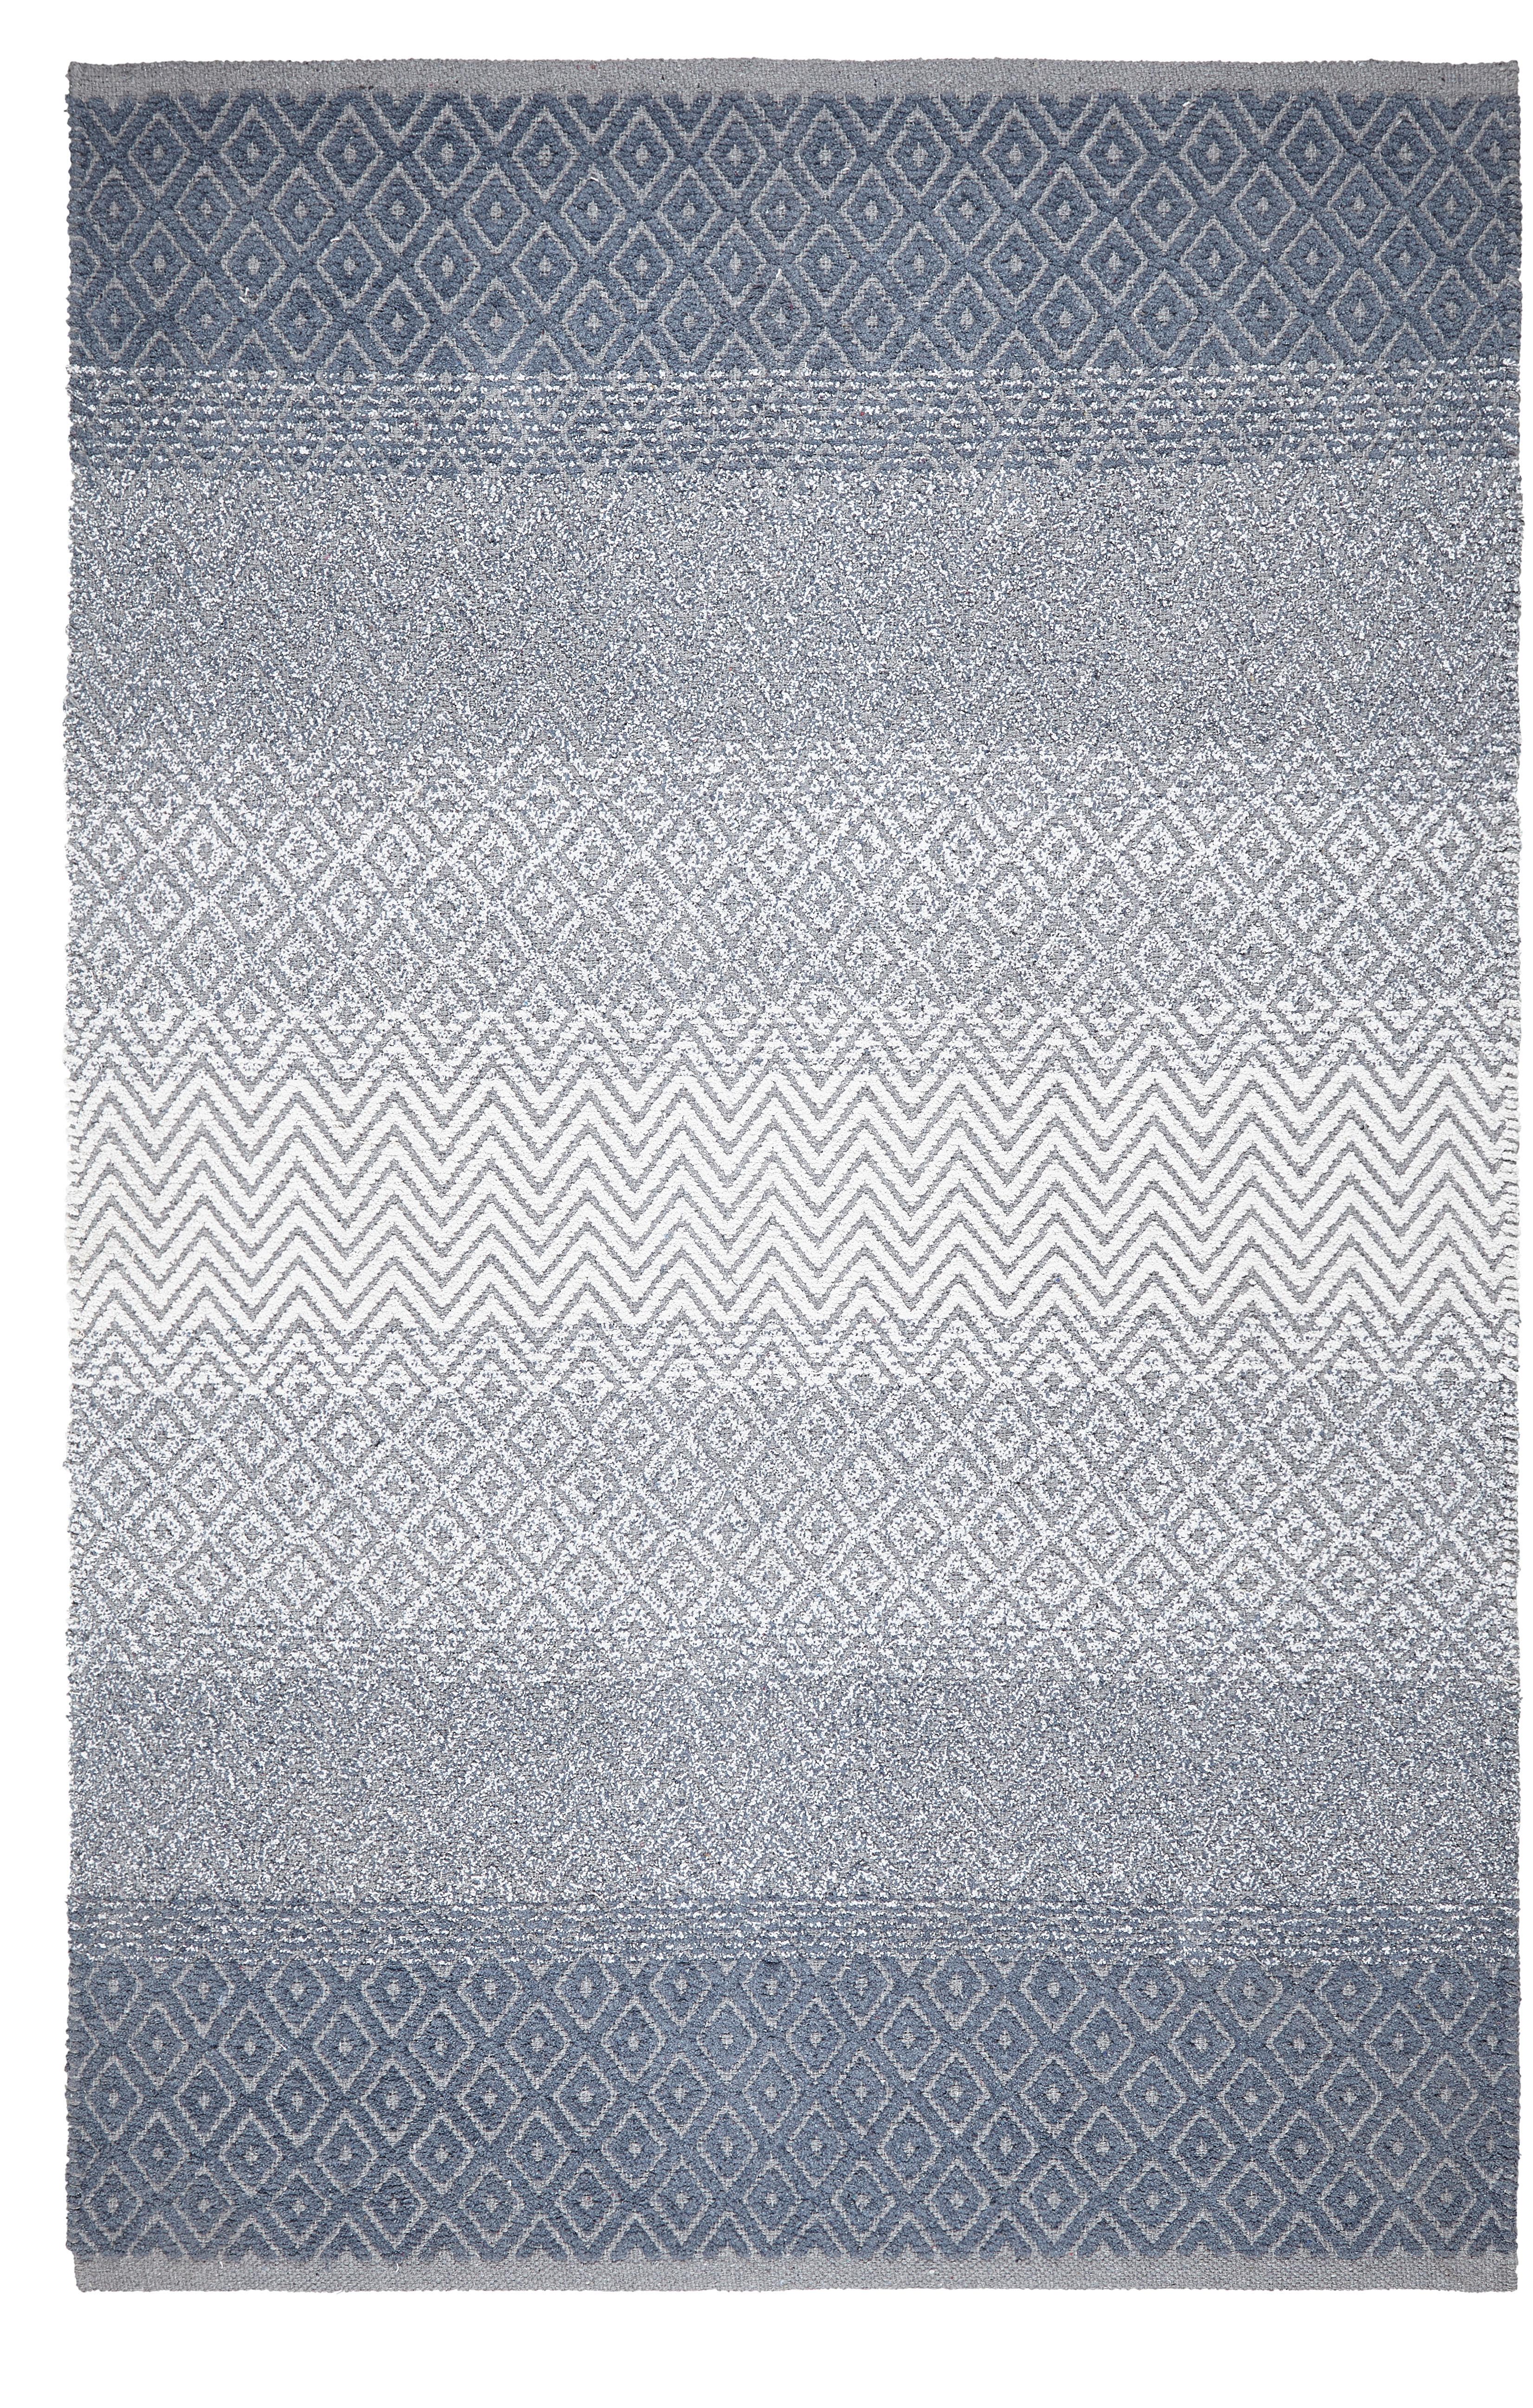 Fleckerteppich Malta in Grau ca. 100x150cm - Grau, Basics, Textil (100/150cm) - Modern Living